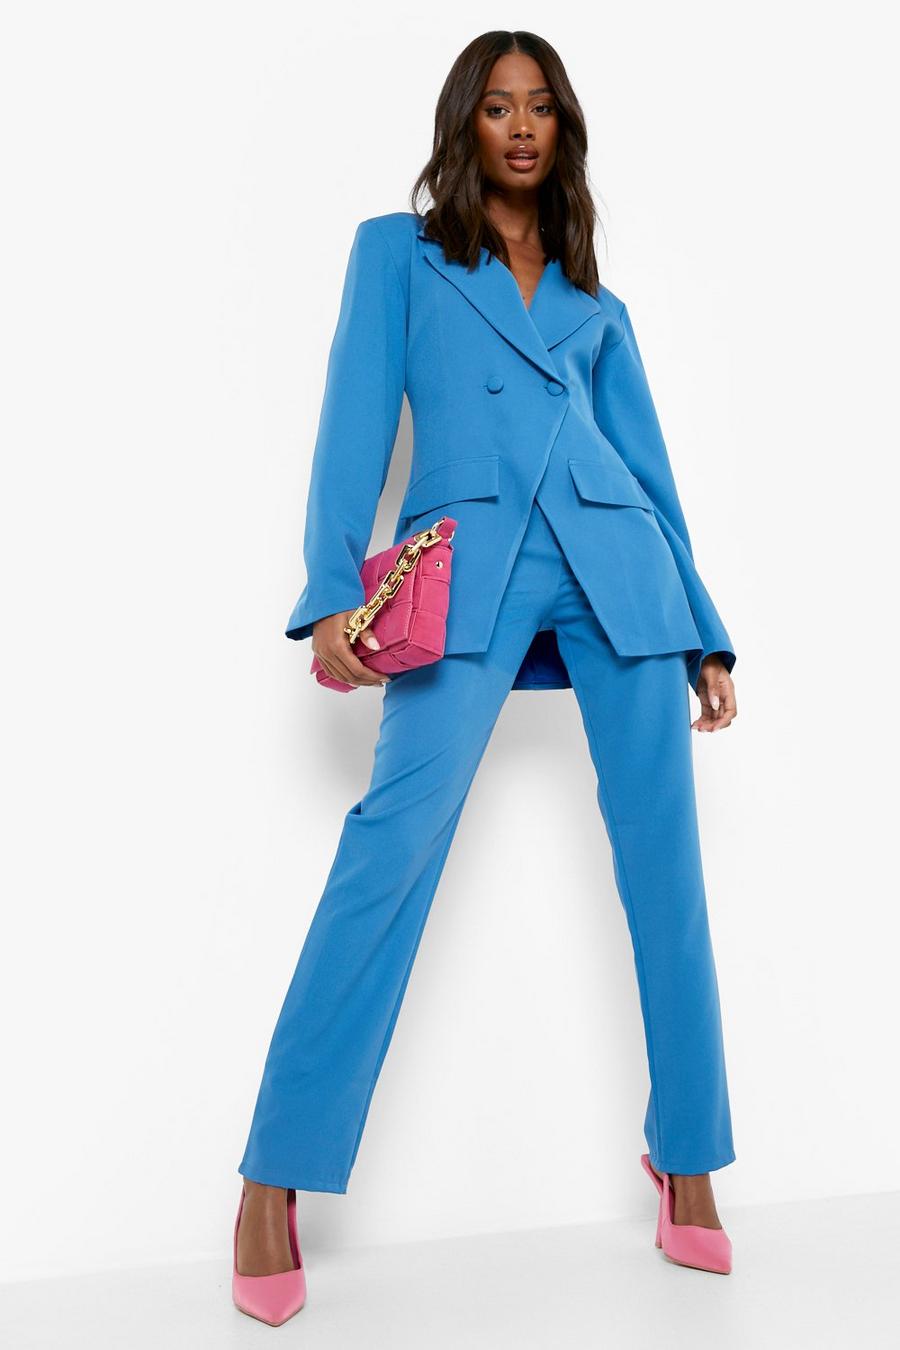 https://media.boohoo.com/i/boohoo/gzz00409_azure_xl/female-azure-straight-leg-tailored-trousers/?w=900&qlt=default&fmt.jp2.qlt=70&fmt=auto&sm=fit